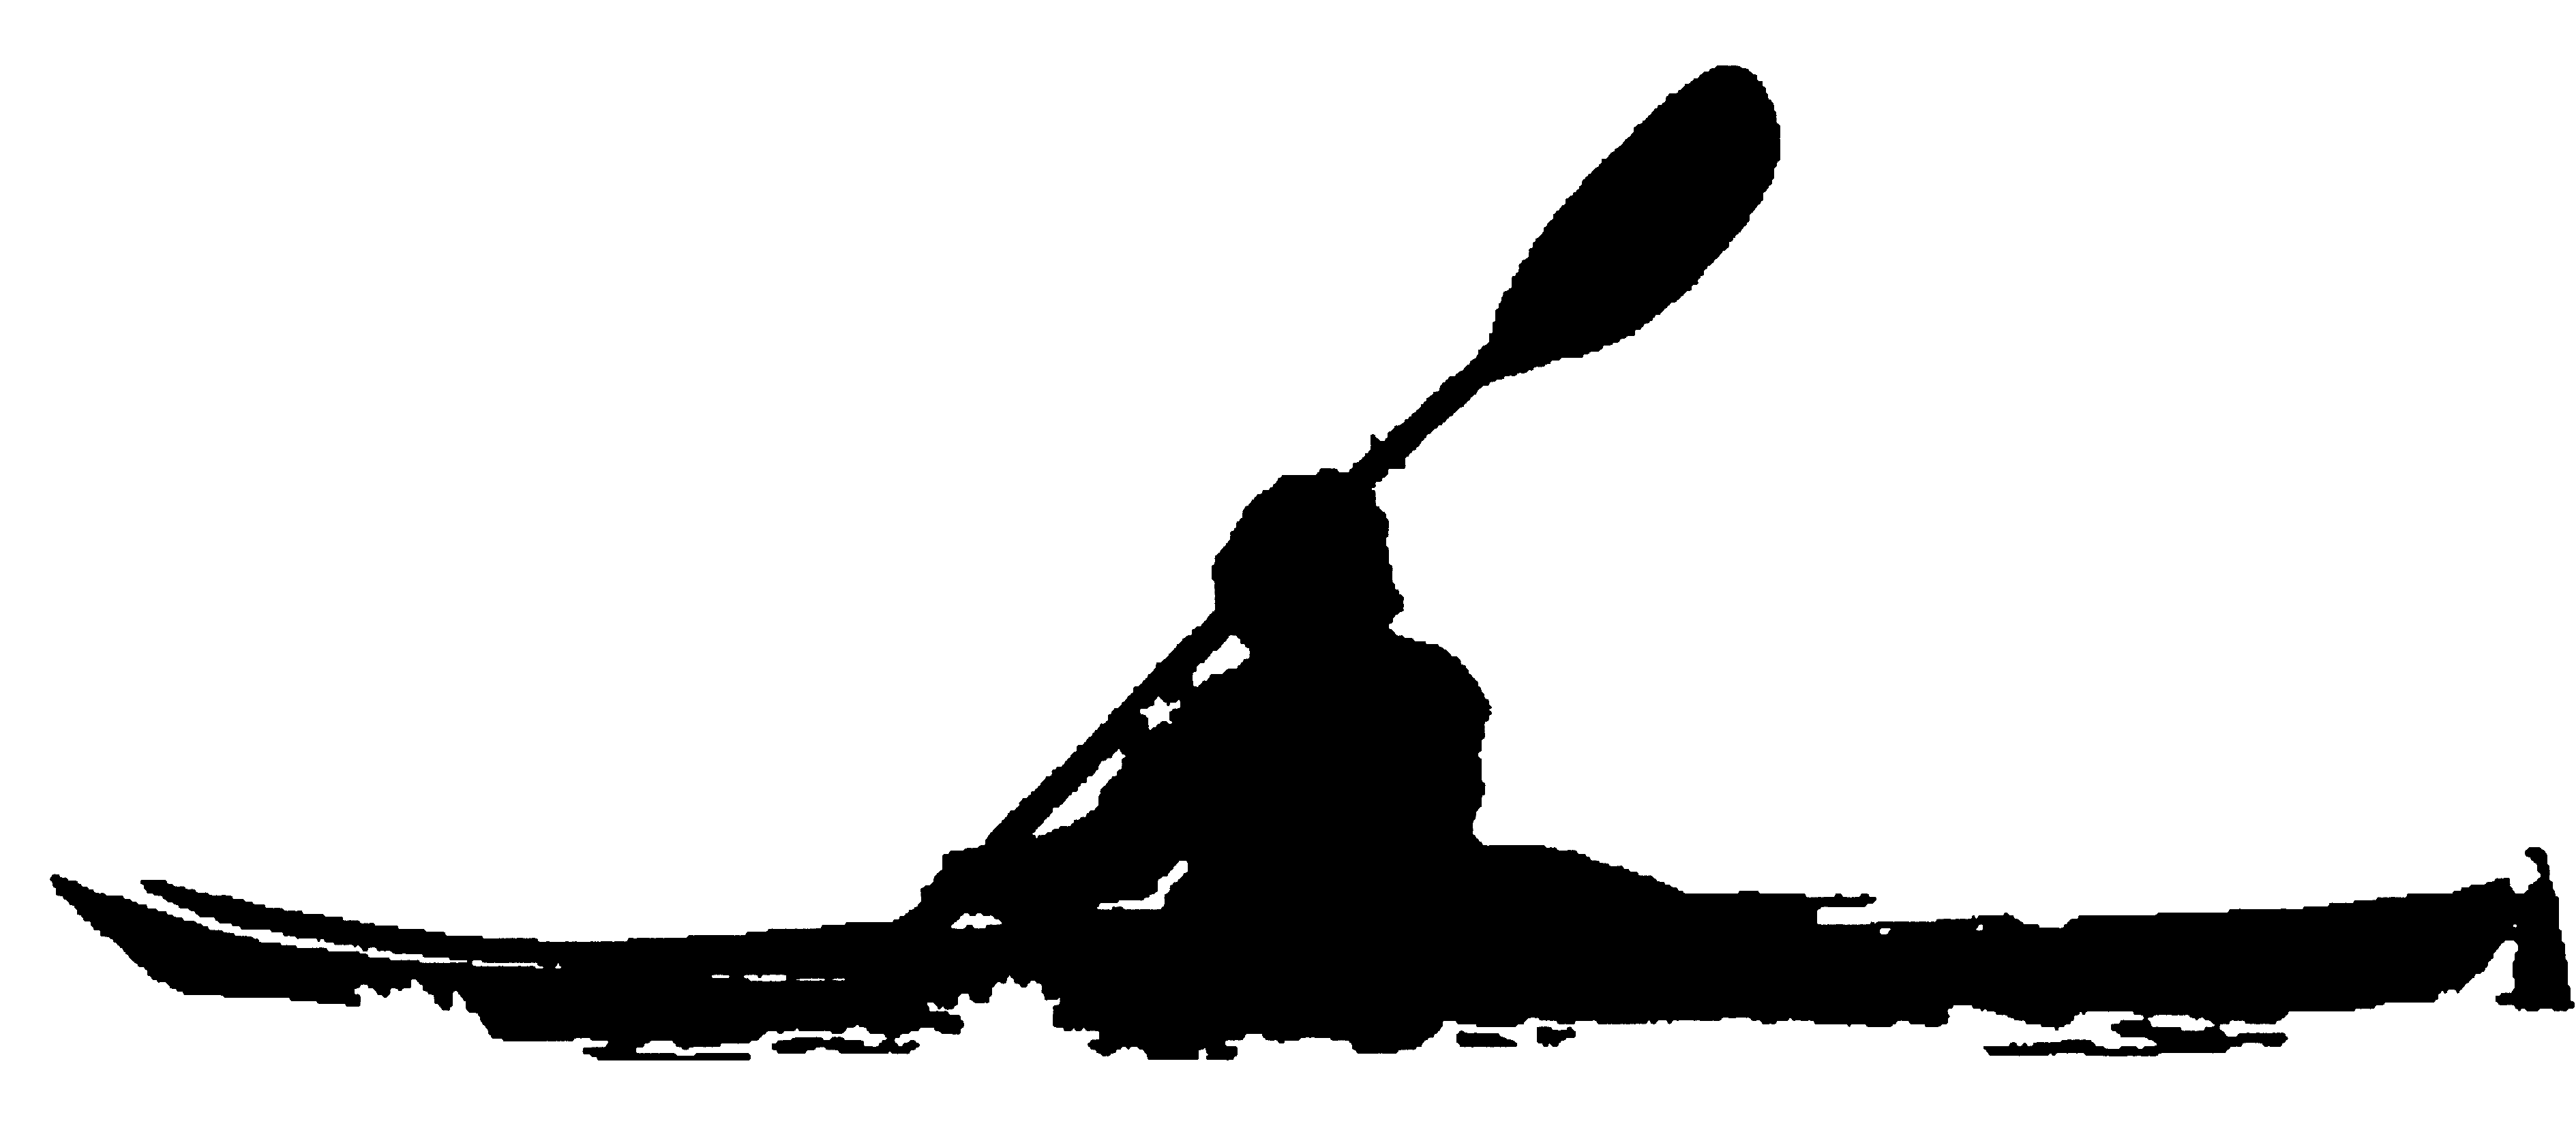 Canoe clip art free. Boating clipart kayak